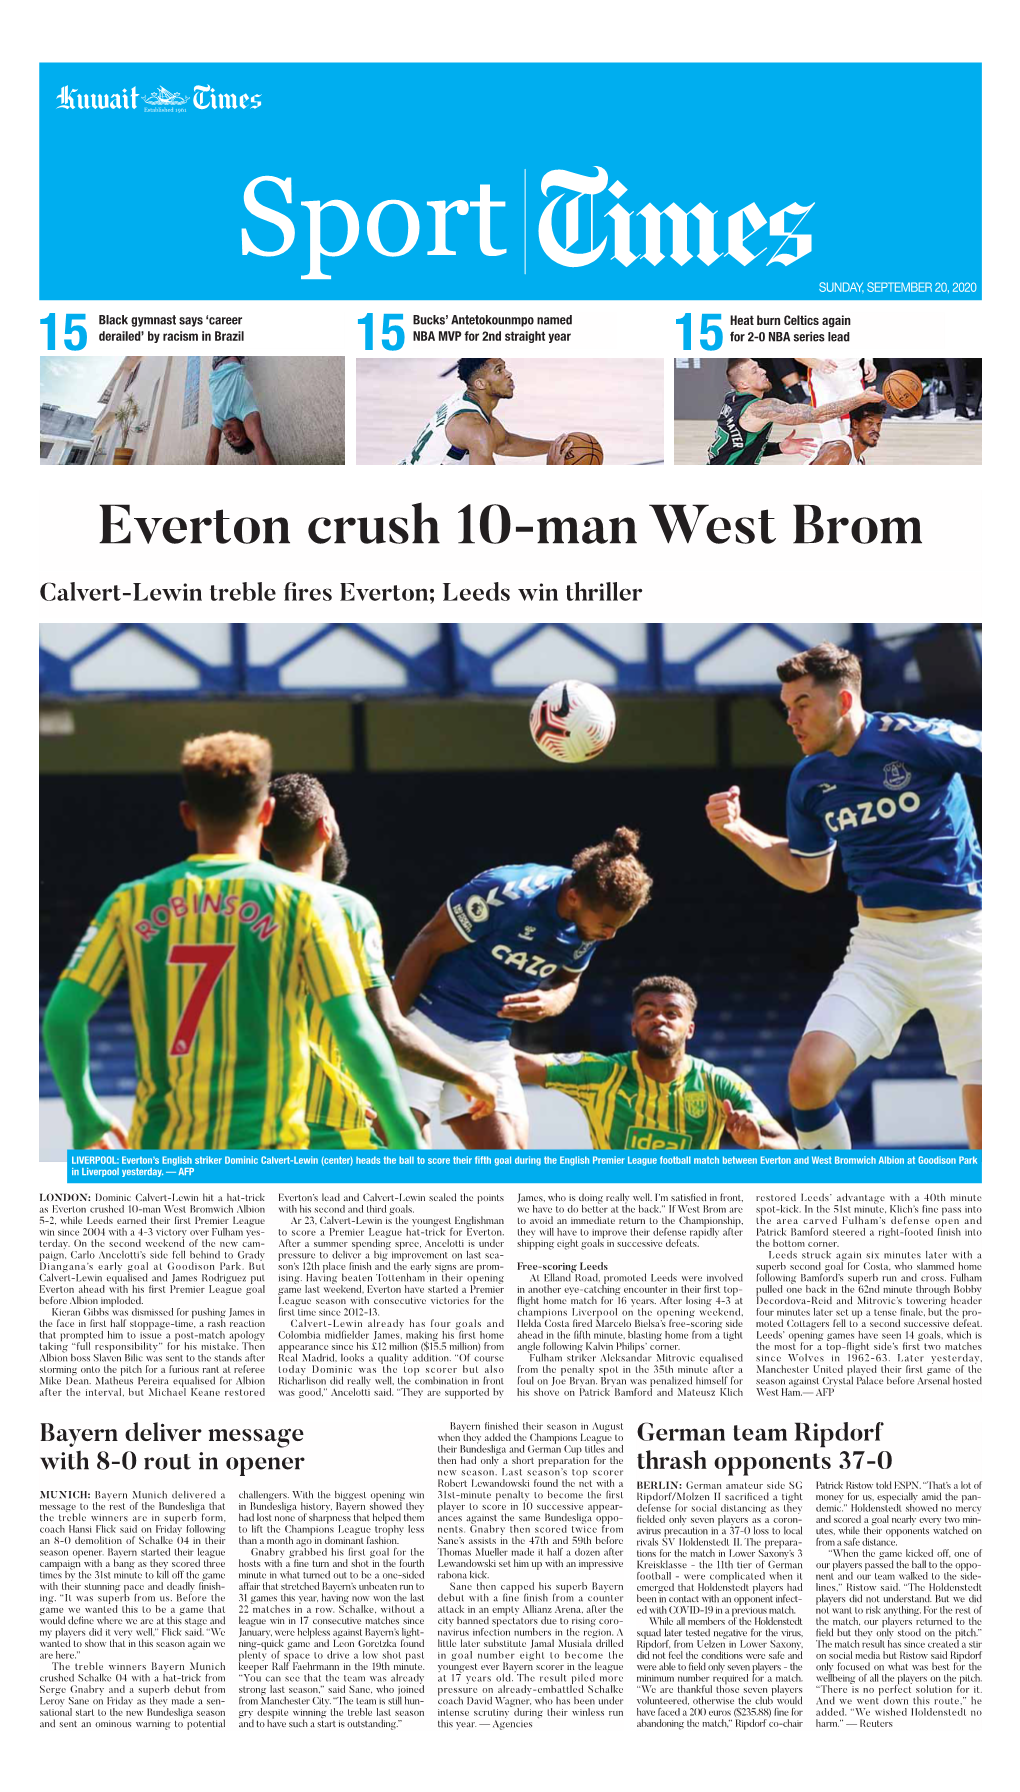 Everton Crush 10-Man West Brom Calvert-Lewin Treble Fires Everton; Leeds Win Thriller